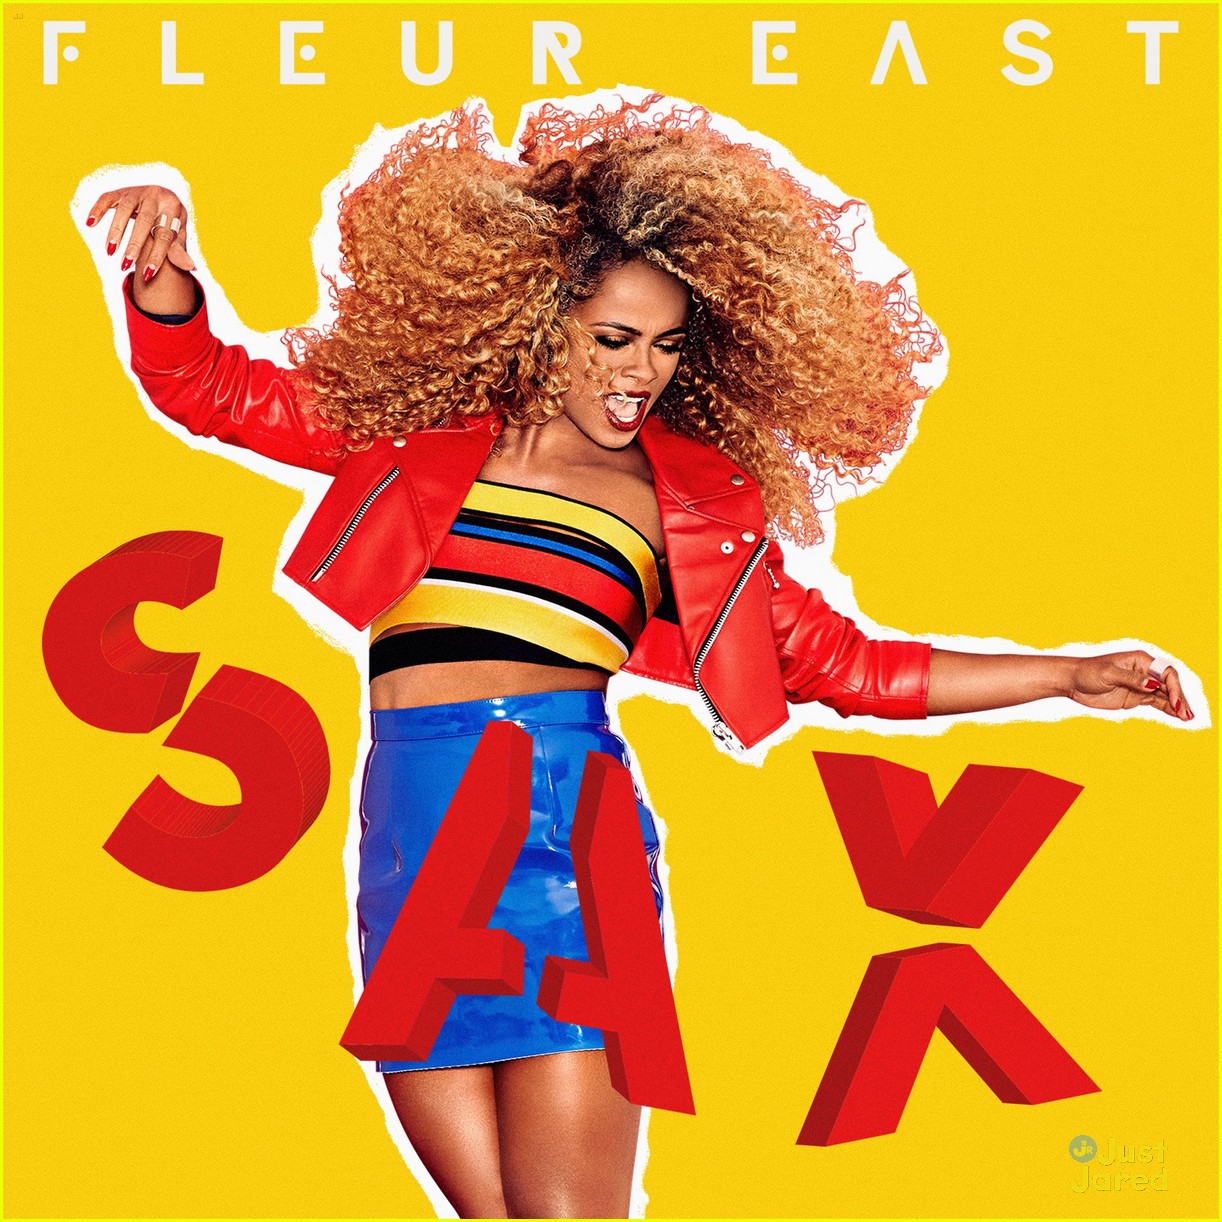 fleur east love sax flashbacks debut album announcement 06